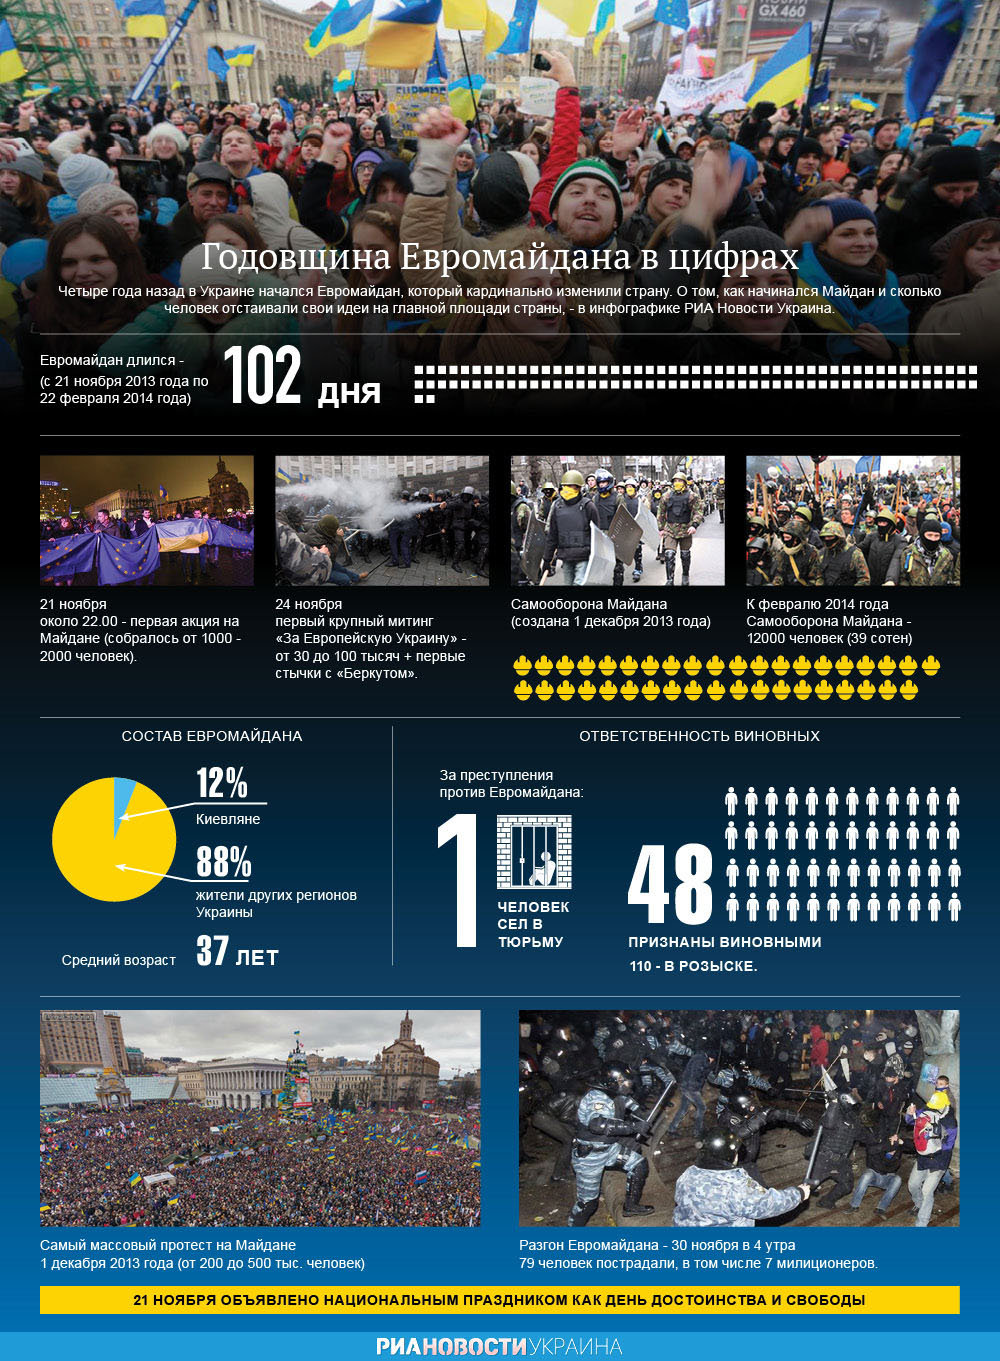 Годовщина Евромайдана в цифрах. Инфографика